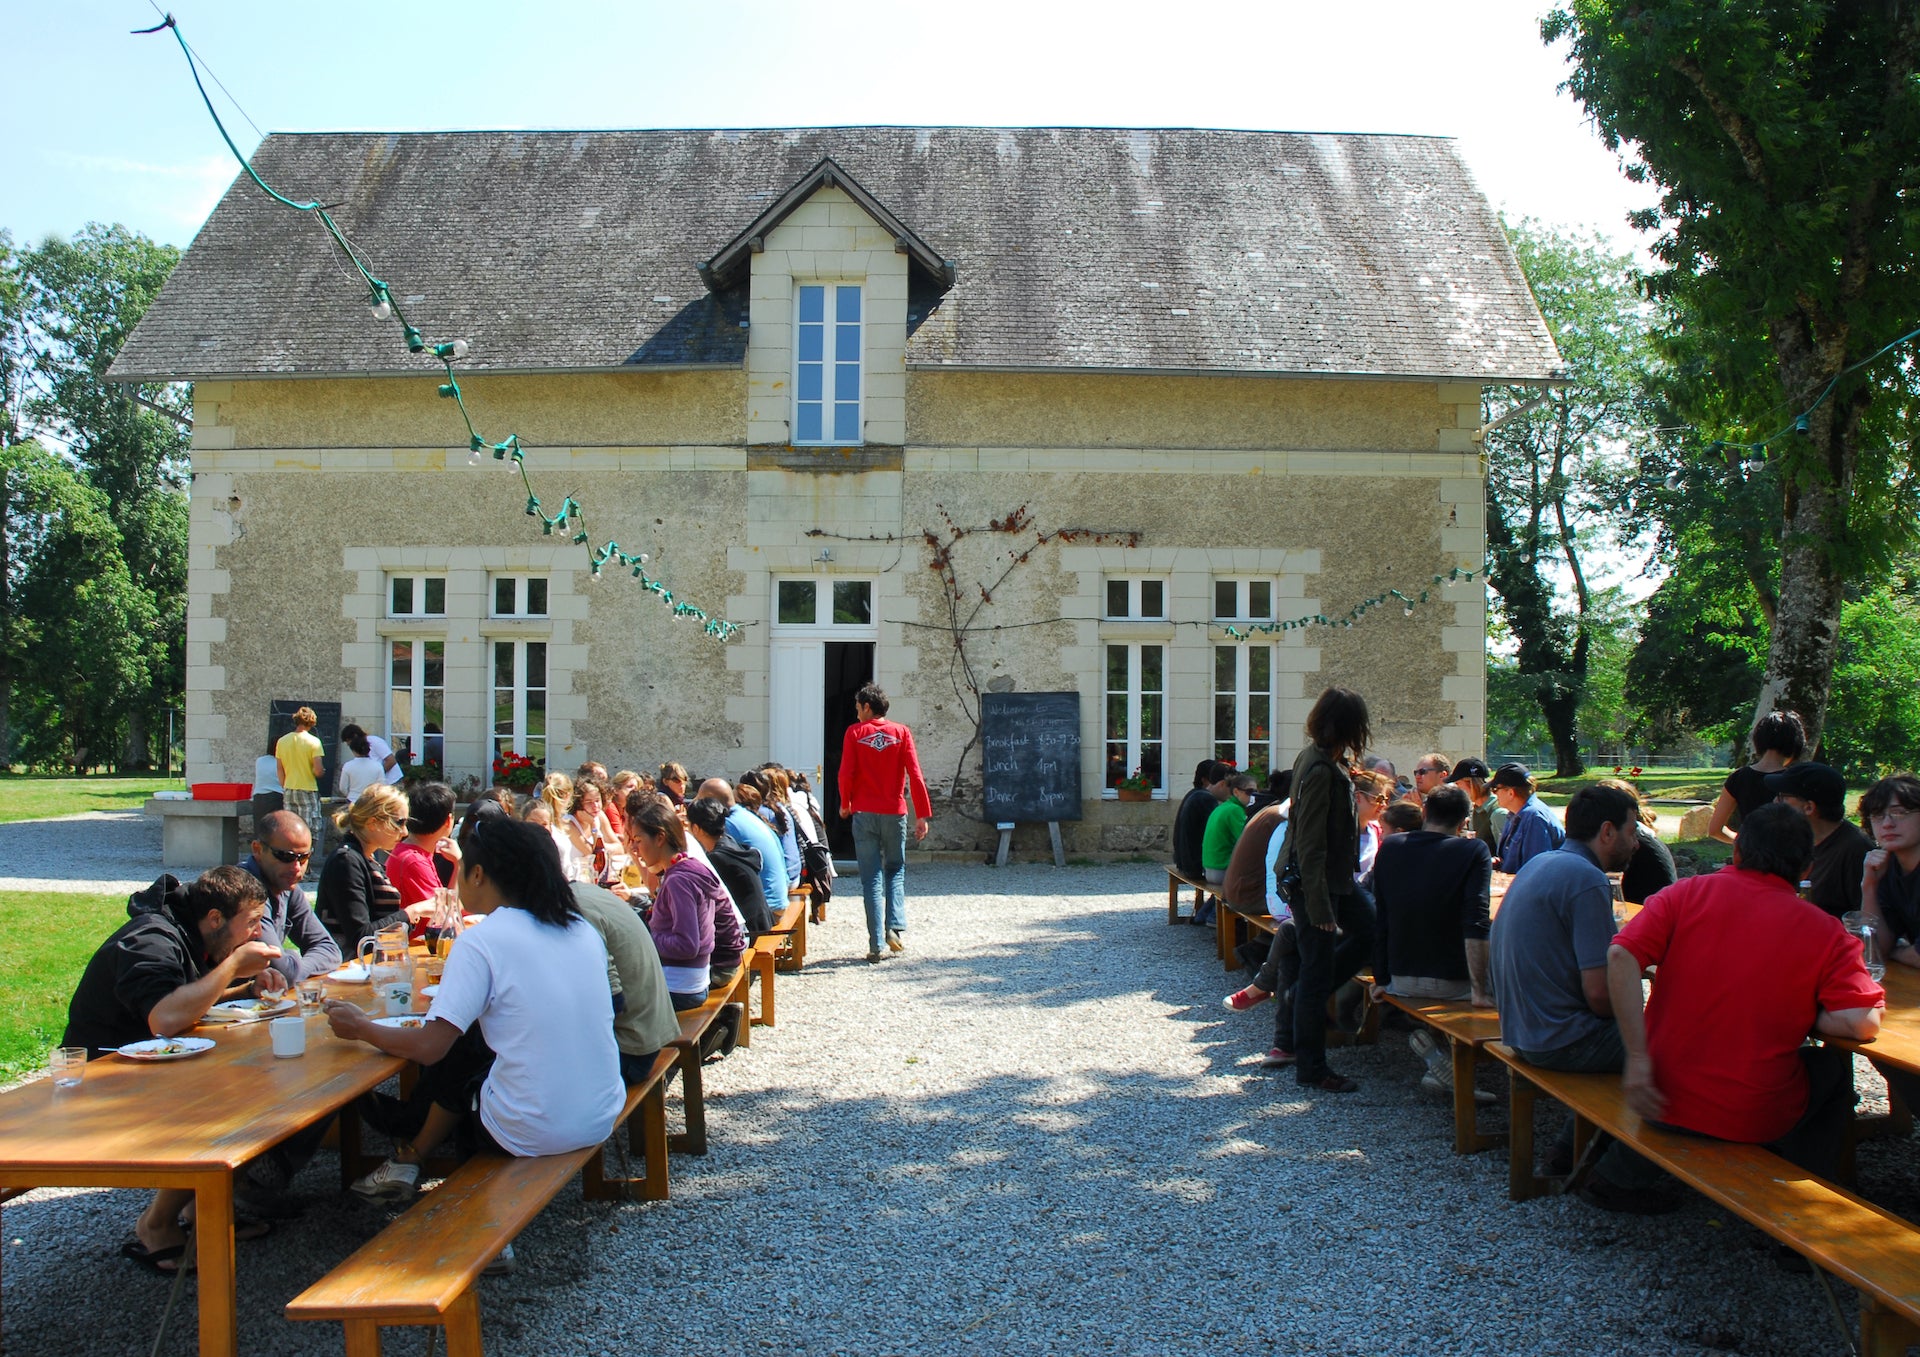 Students enjoy lunch during a summer workshop. Photo © Deidi von Schaven for Domaine de Boisbuchet